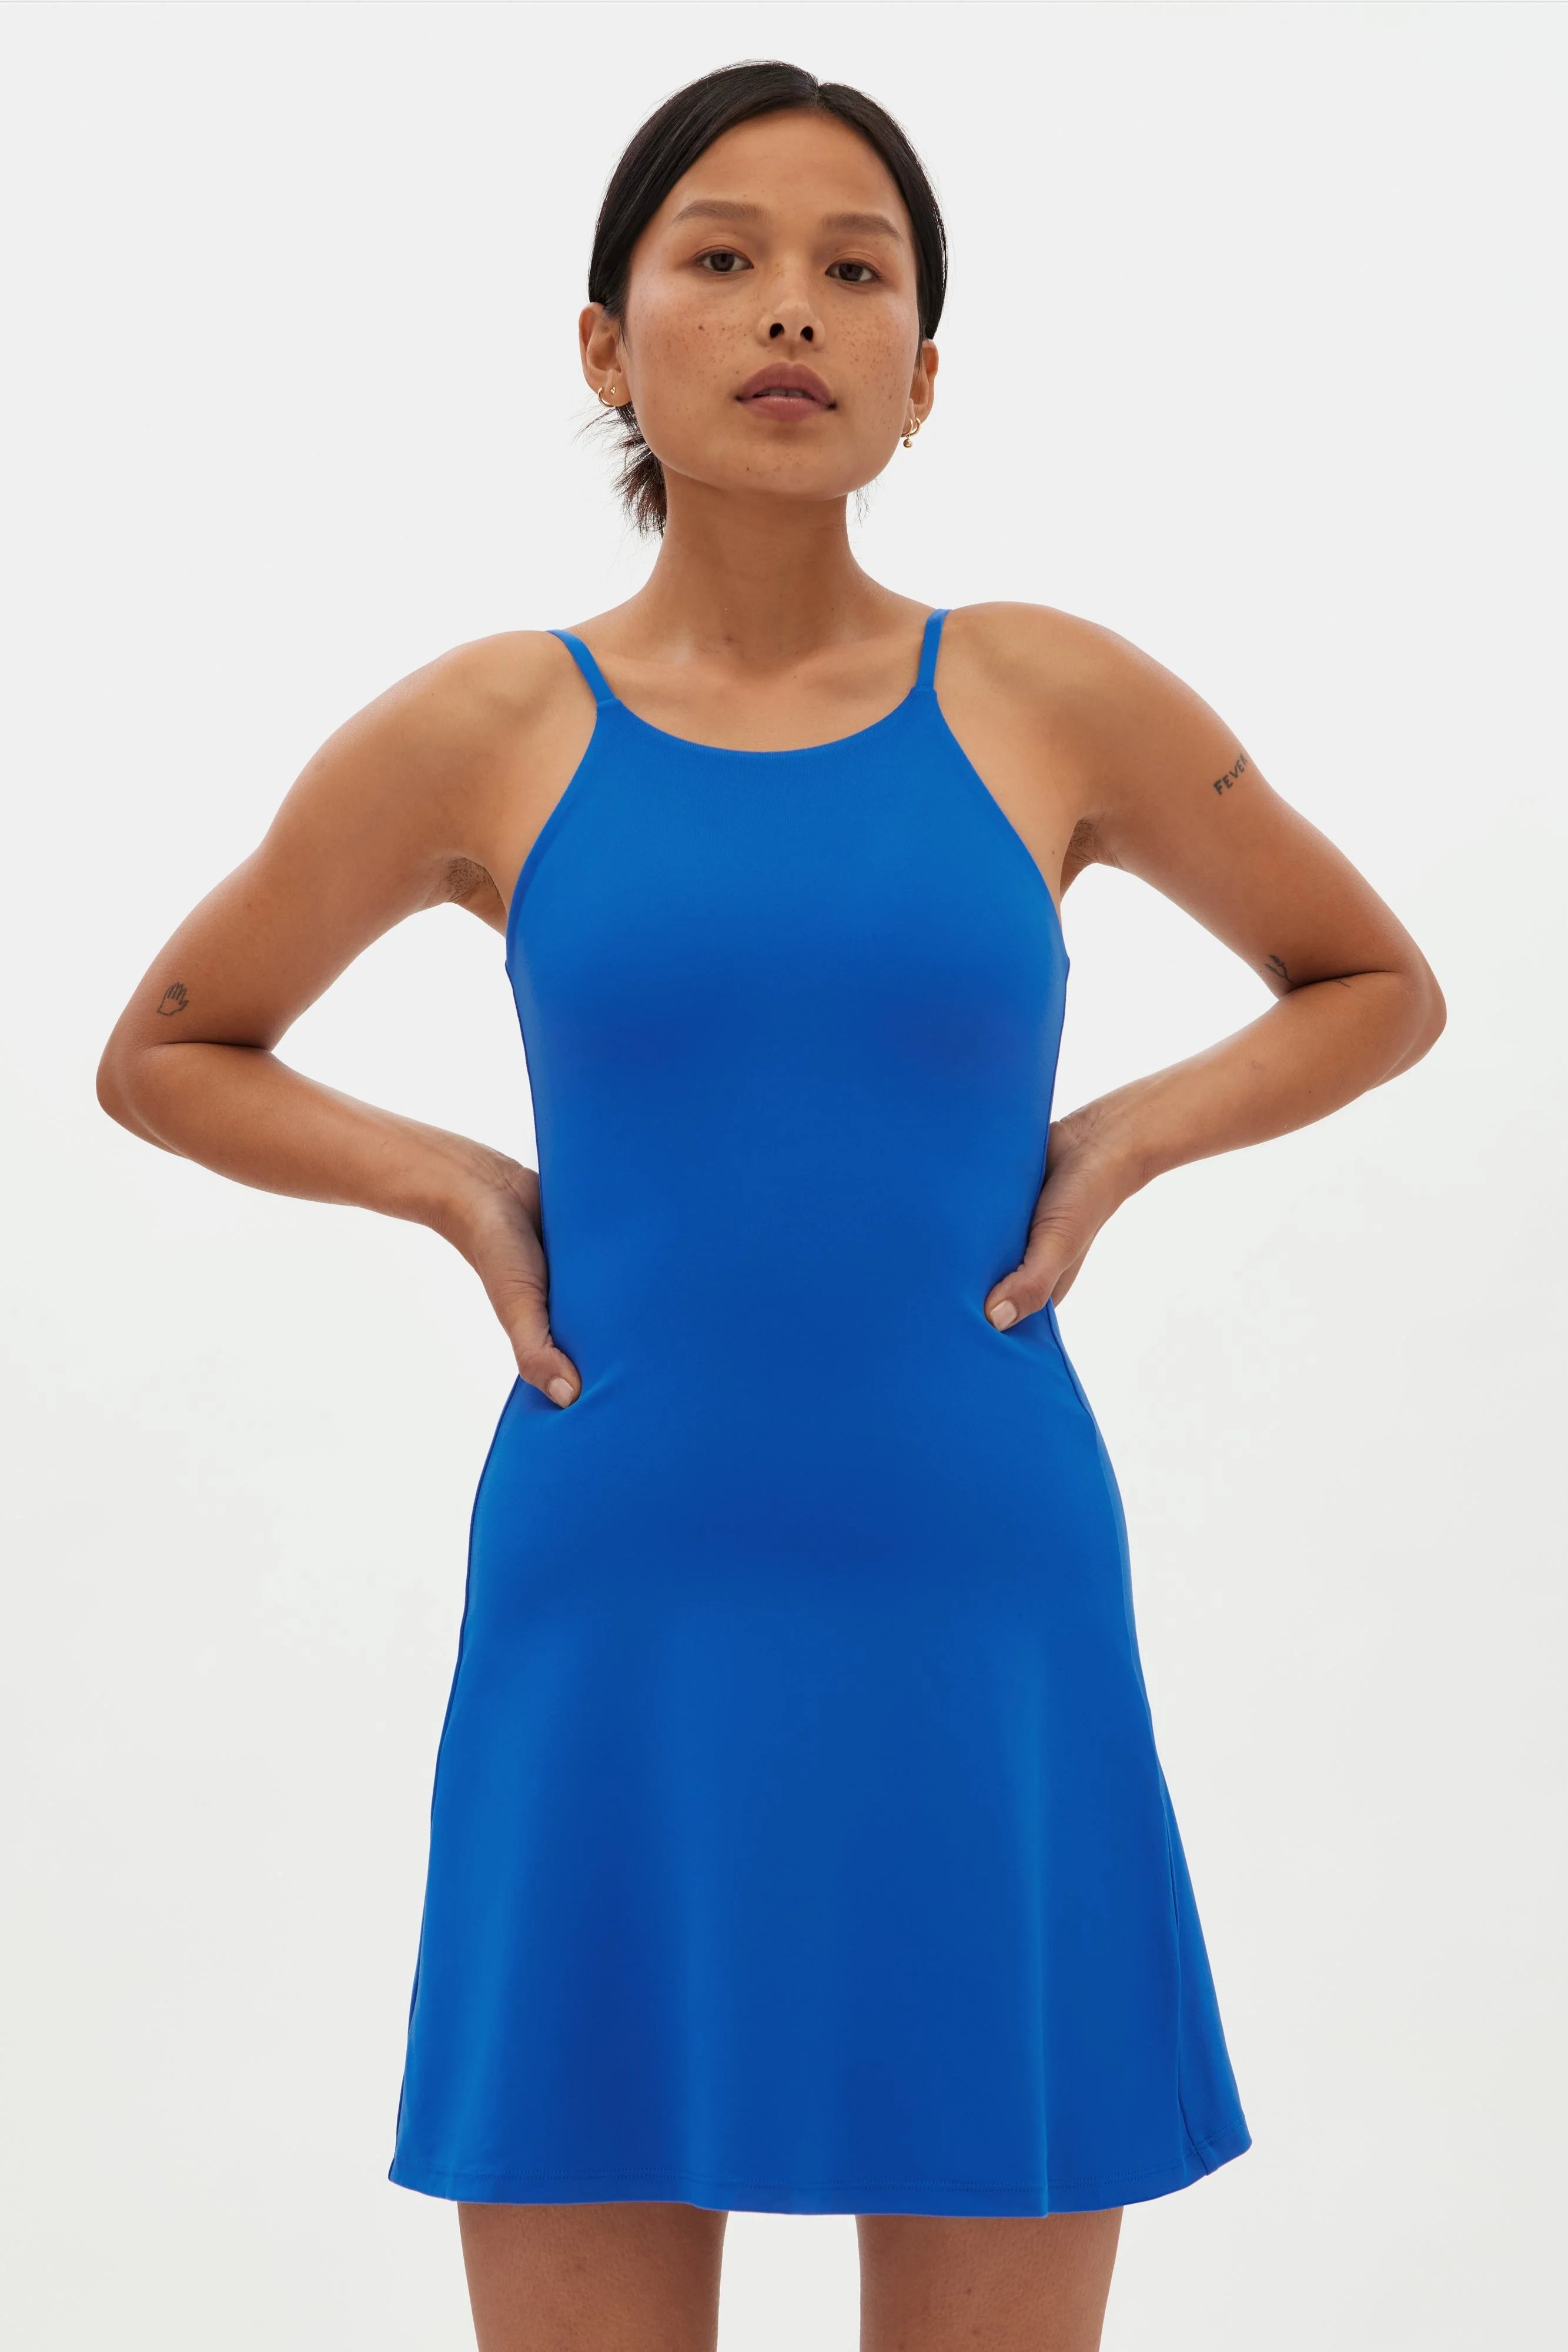 Ultramarine Naomi Workout Dress